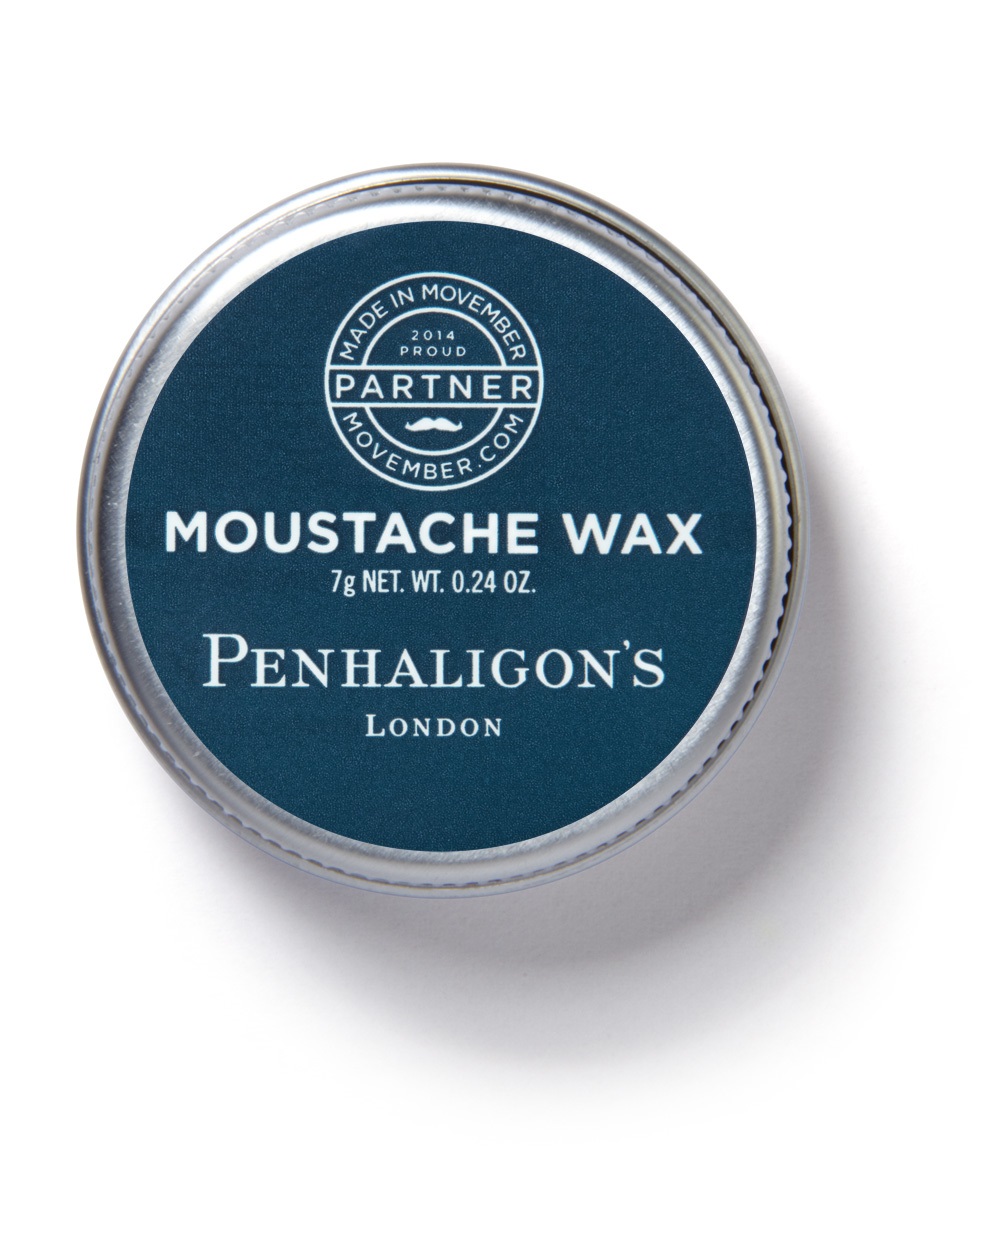 Penhaligon's moustache wax, la marque reversera 2€ à la fondation Movember, 6,30€